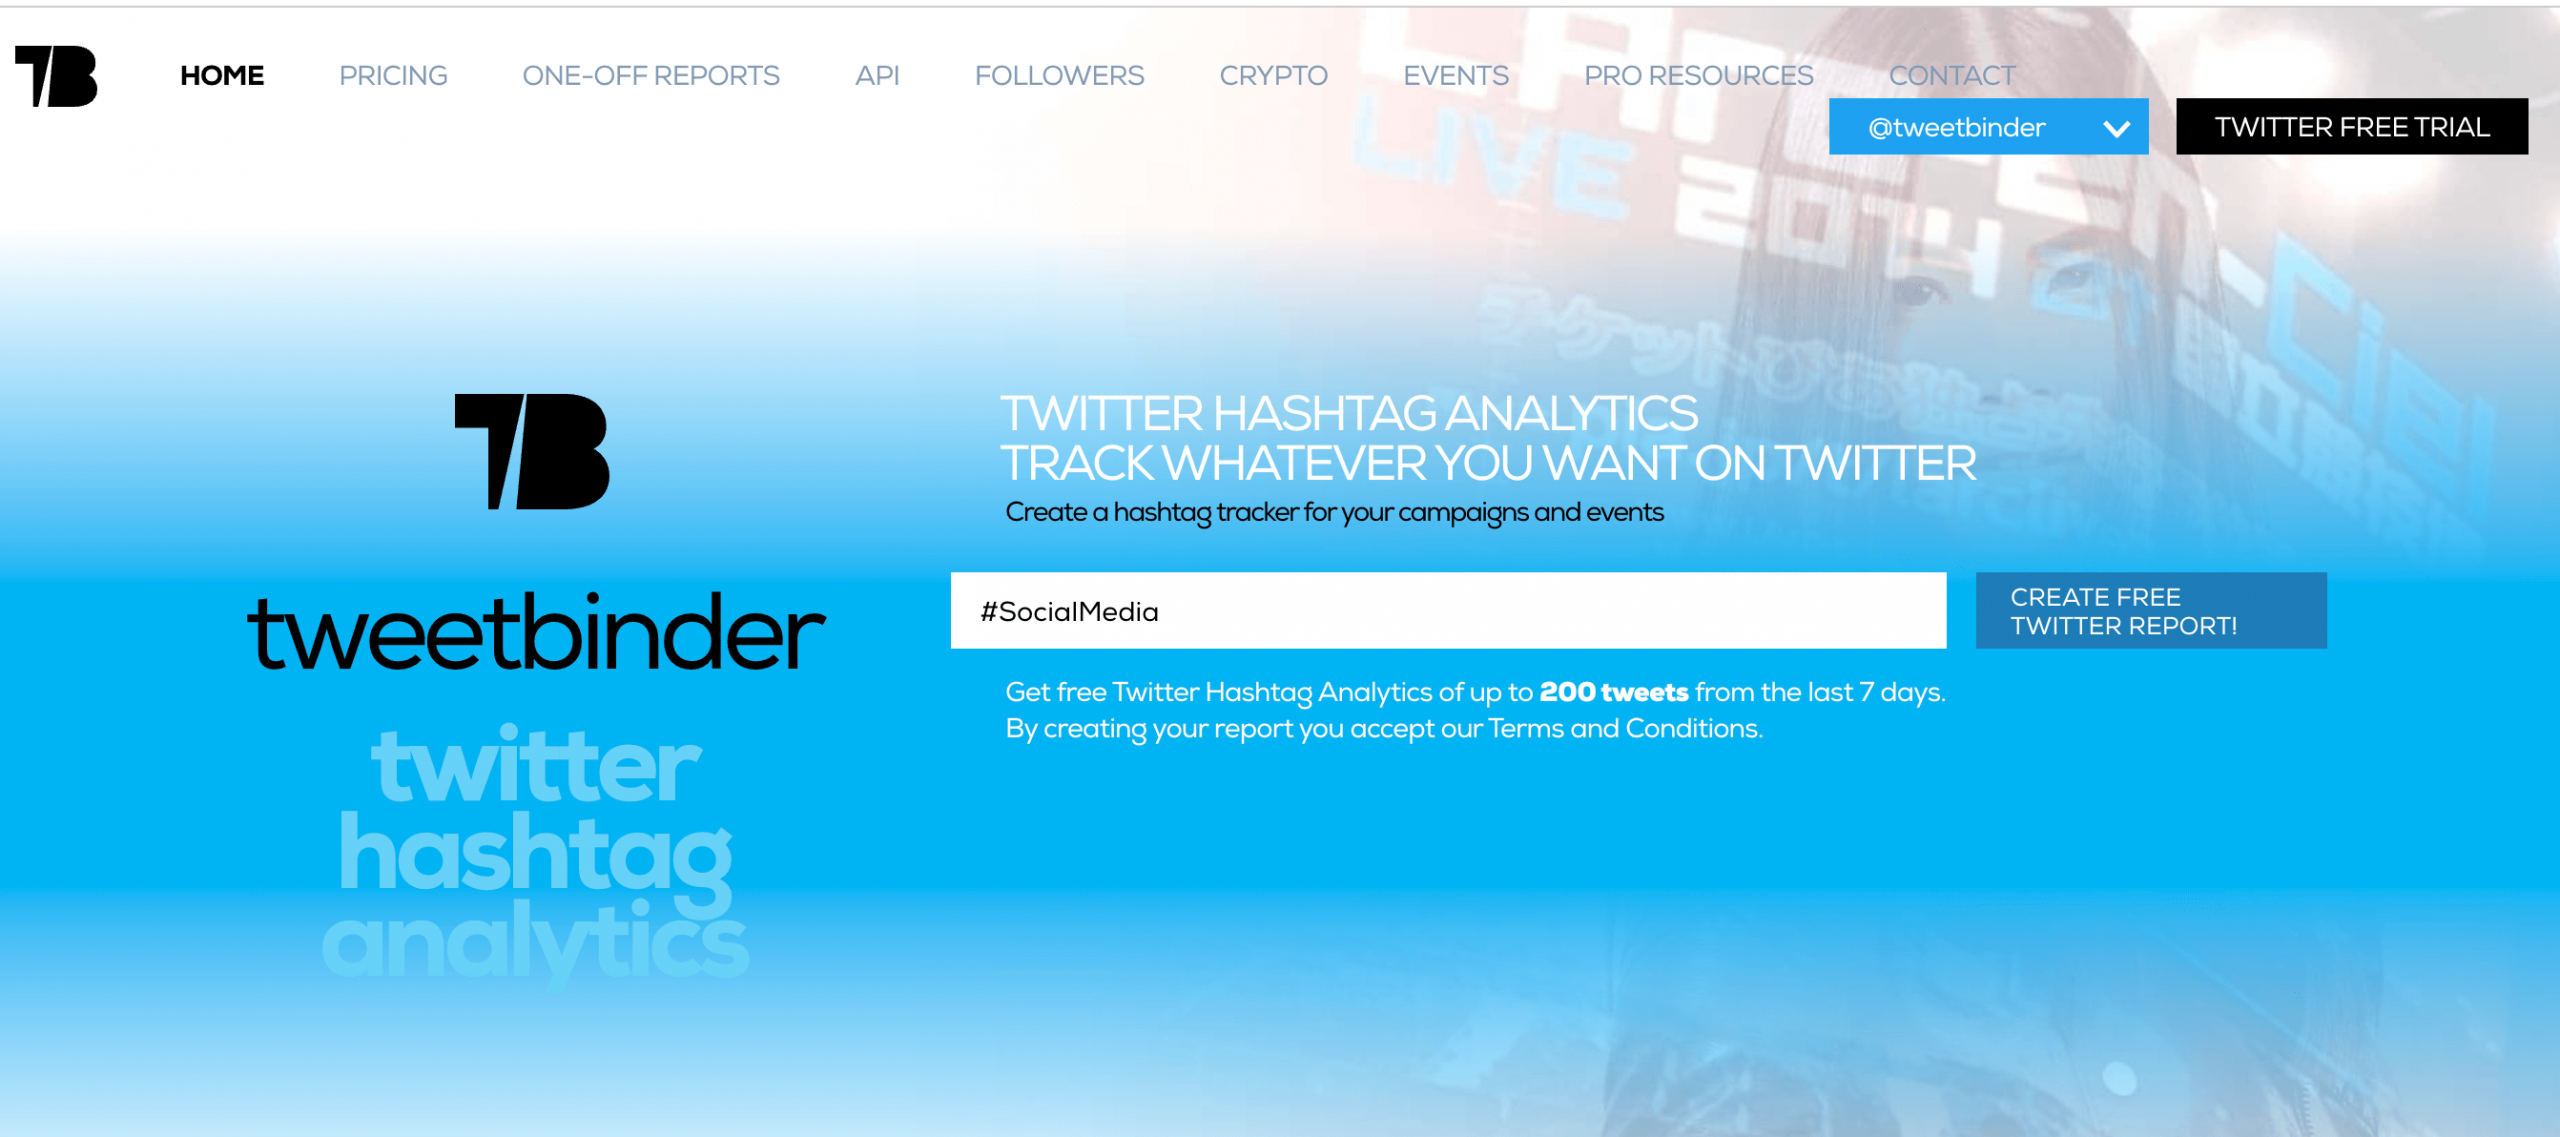 tweet binder Twitter analytics tool